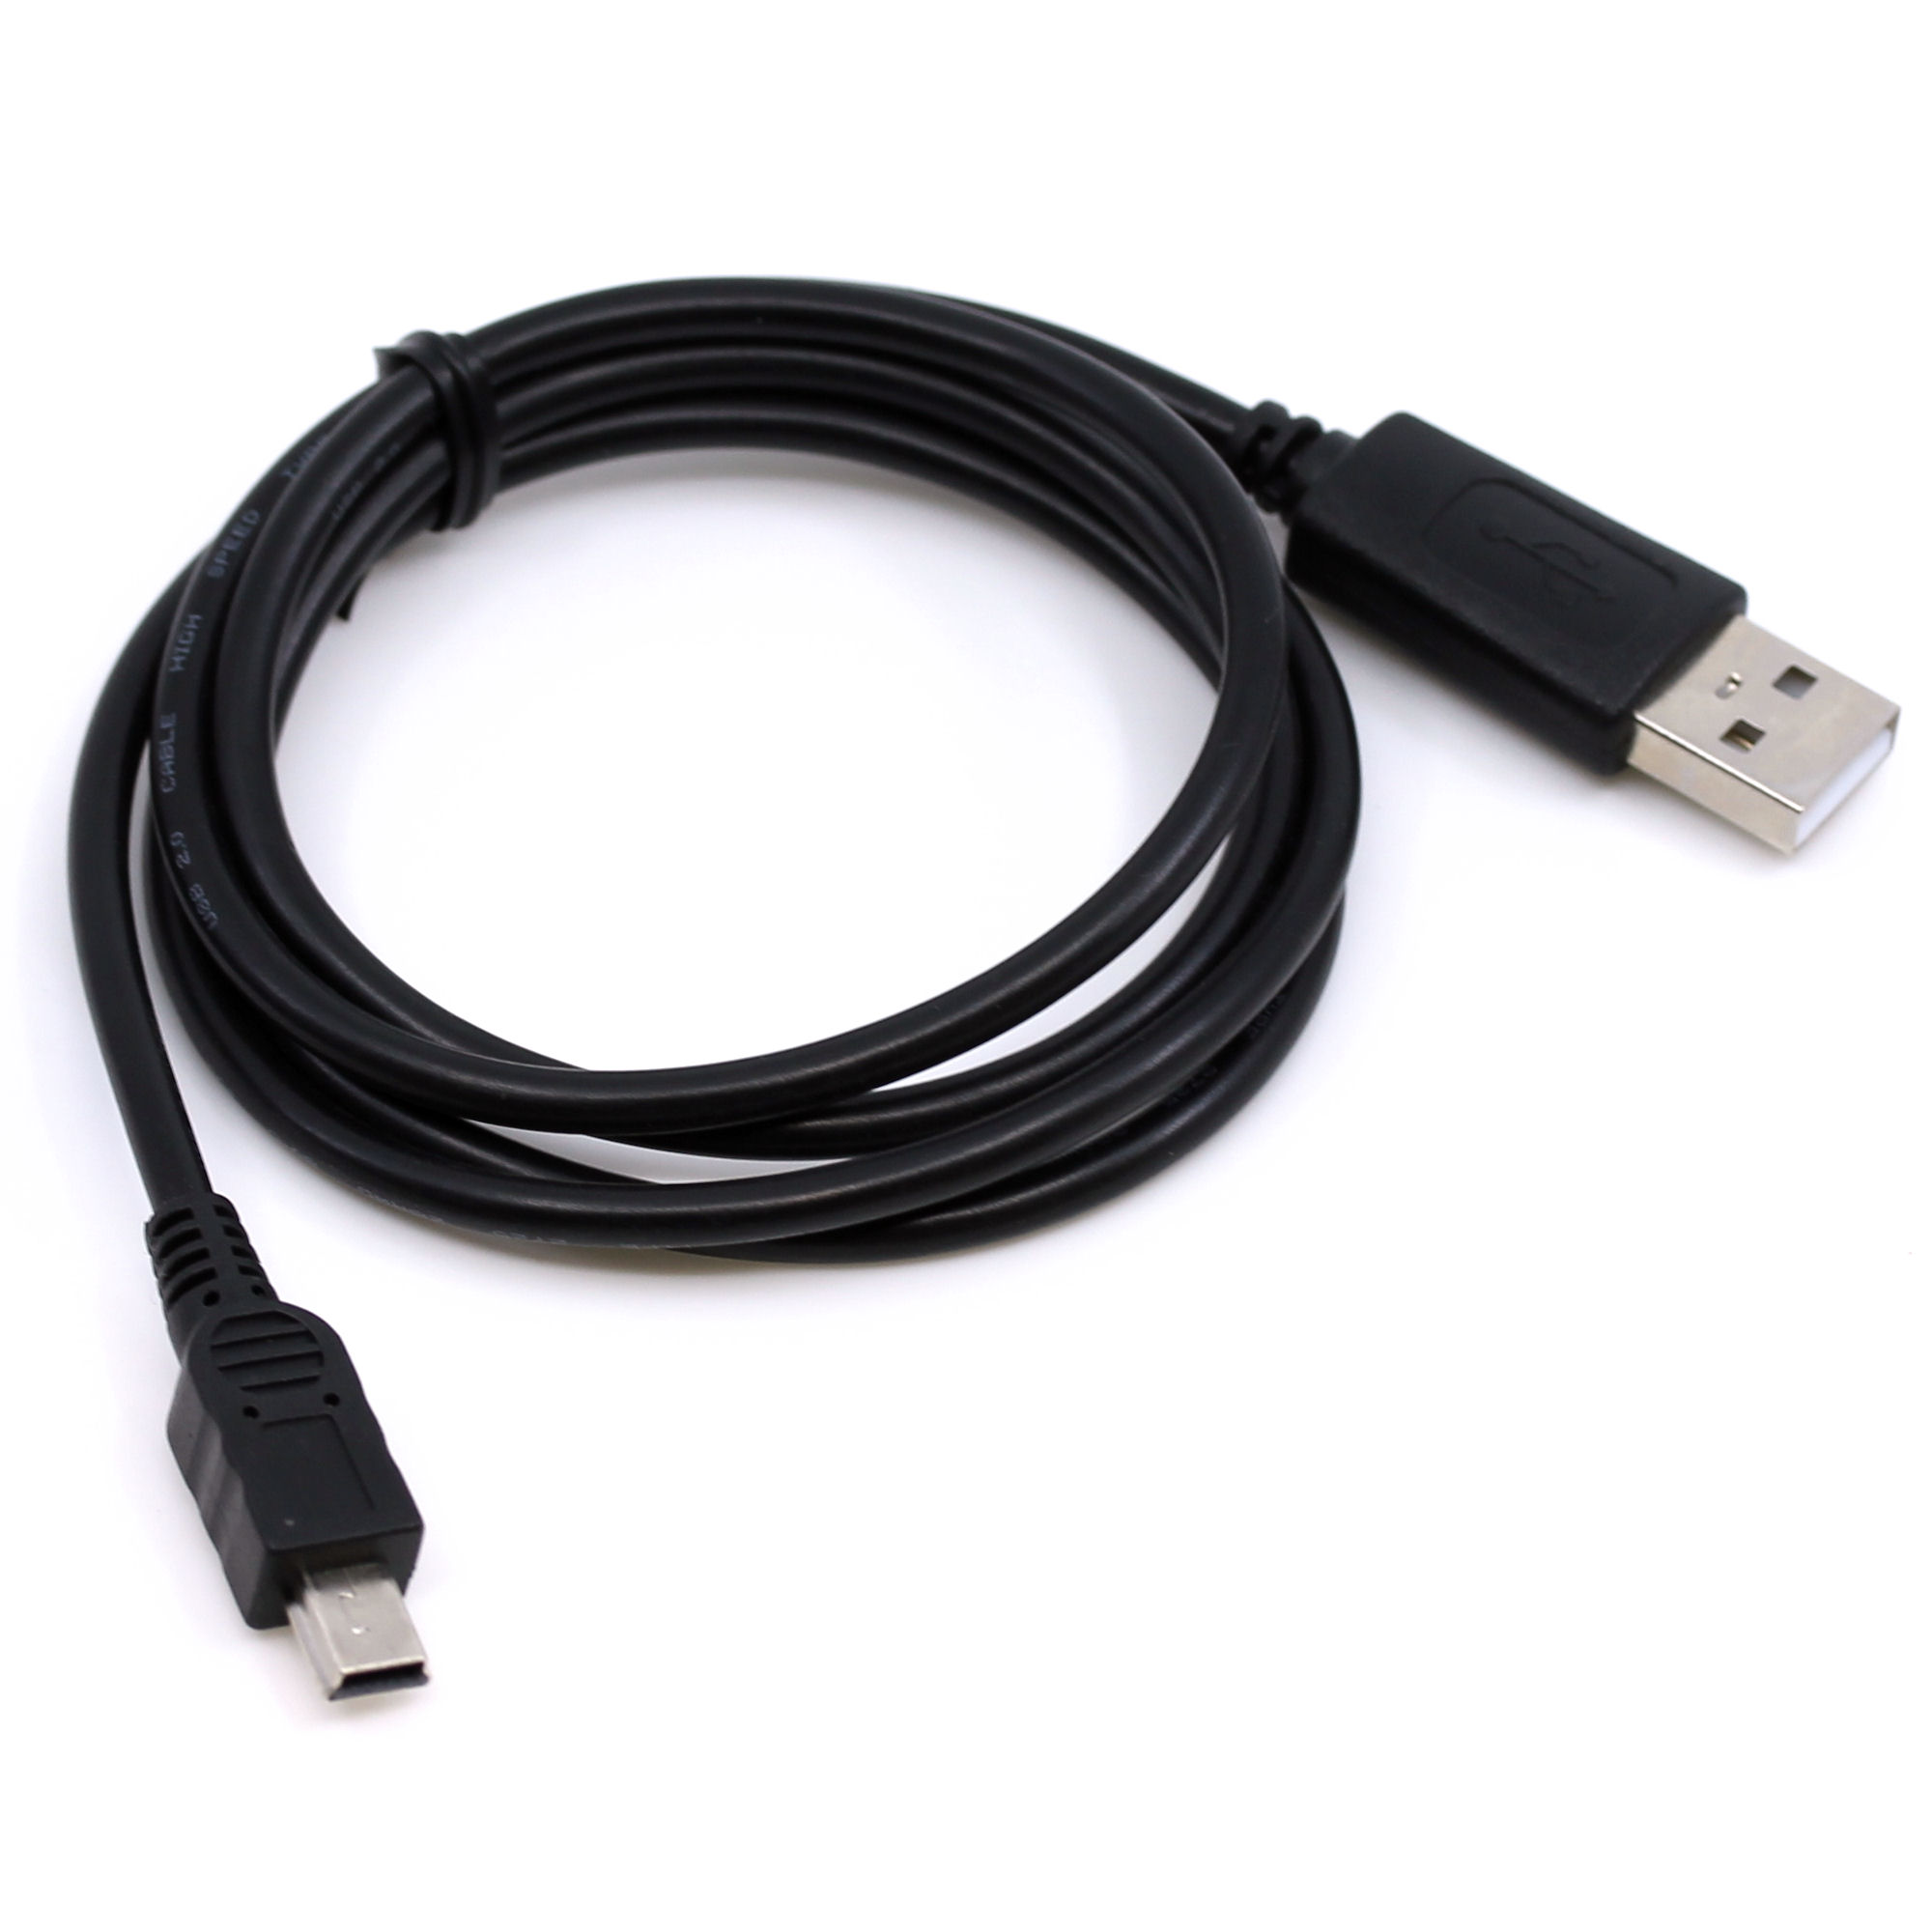 USB Datenkabel für Konica Minolta Dimage 5, E223, KD-3300